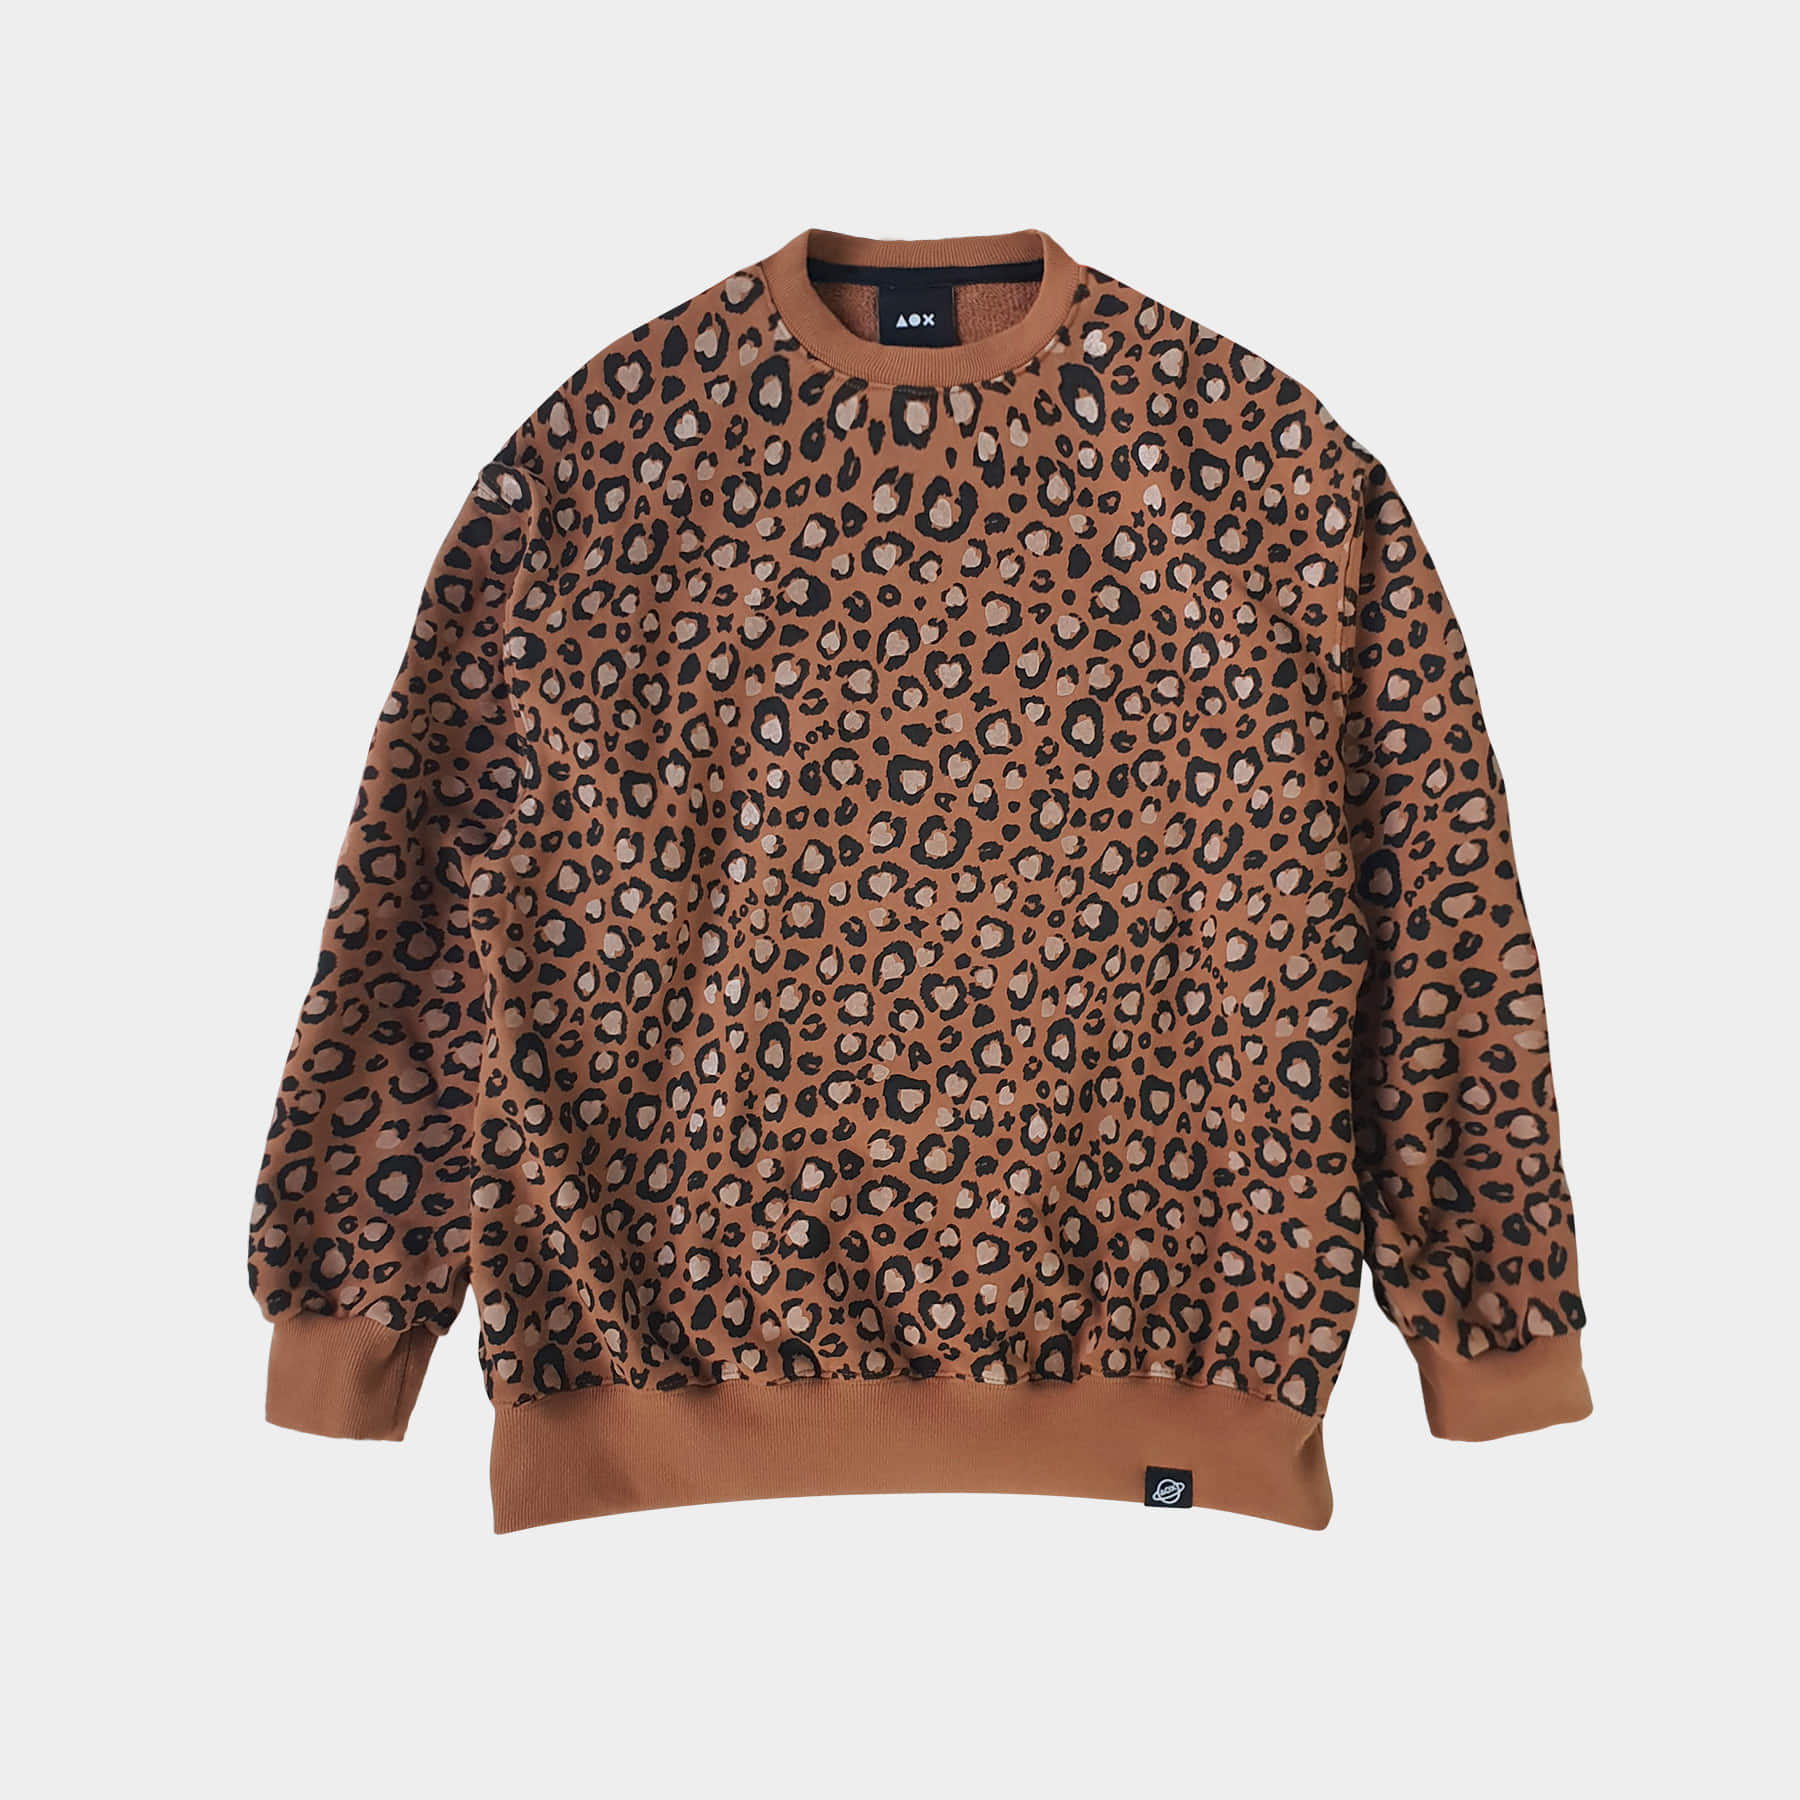 Leopard Sweatshirt (Brown) *no reflective tape